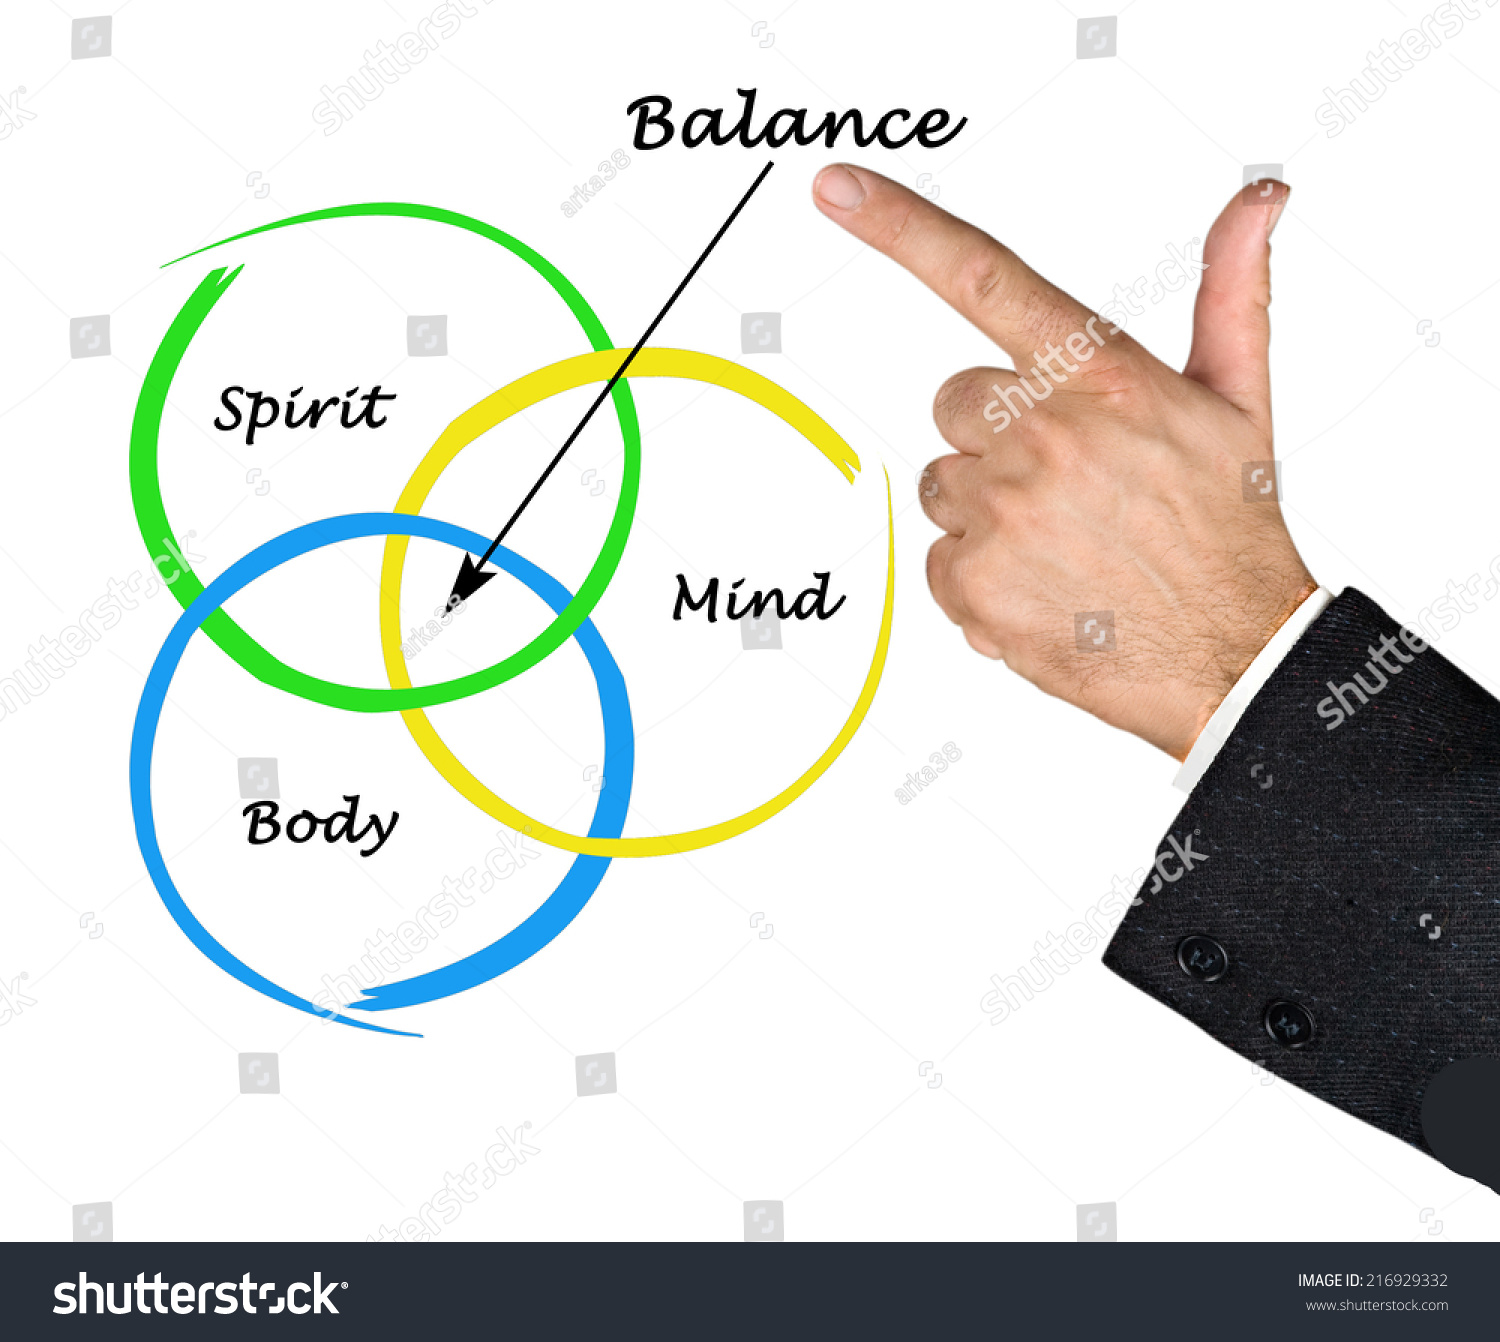 Body, Spirit, Mind Balance Stock Photo 216929332 : Shutterstock